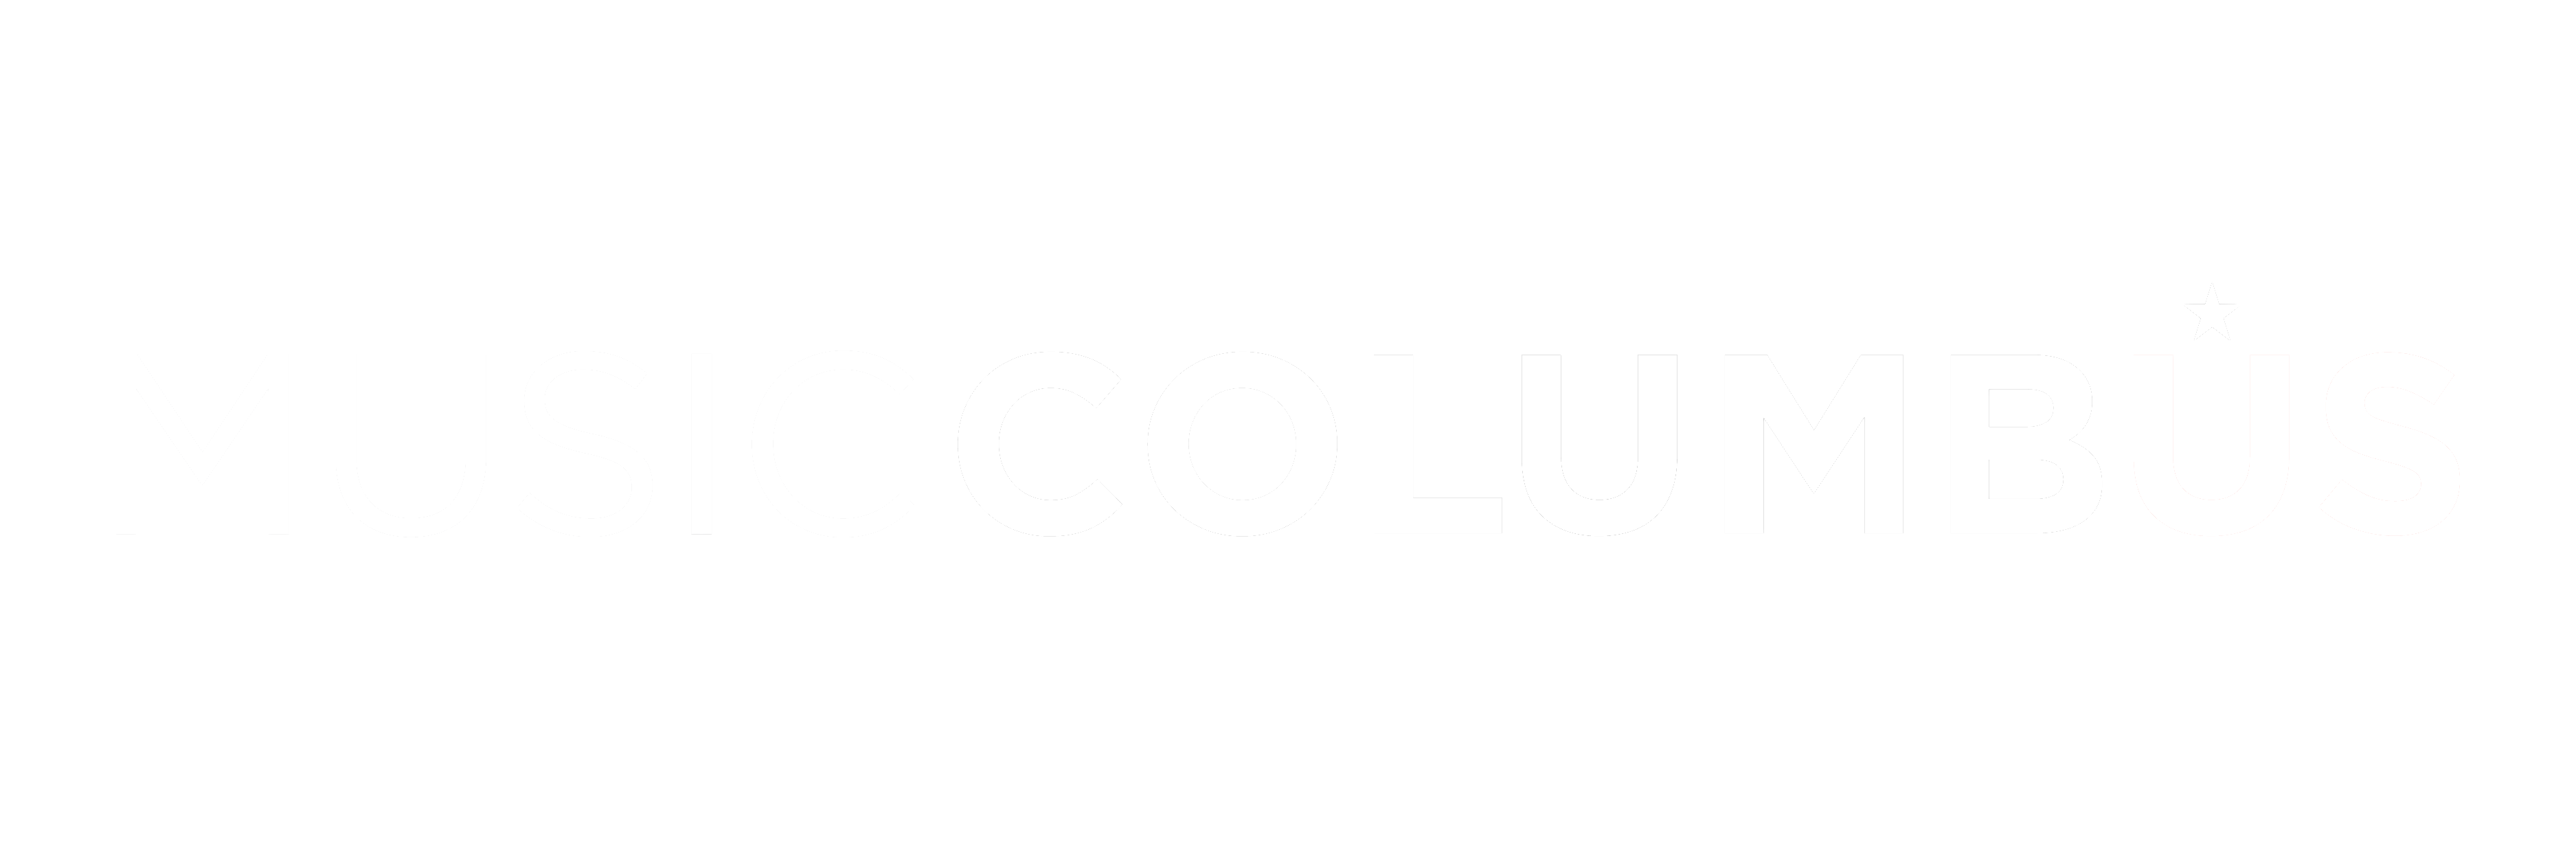 music columbus logo all white